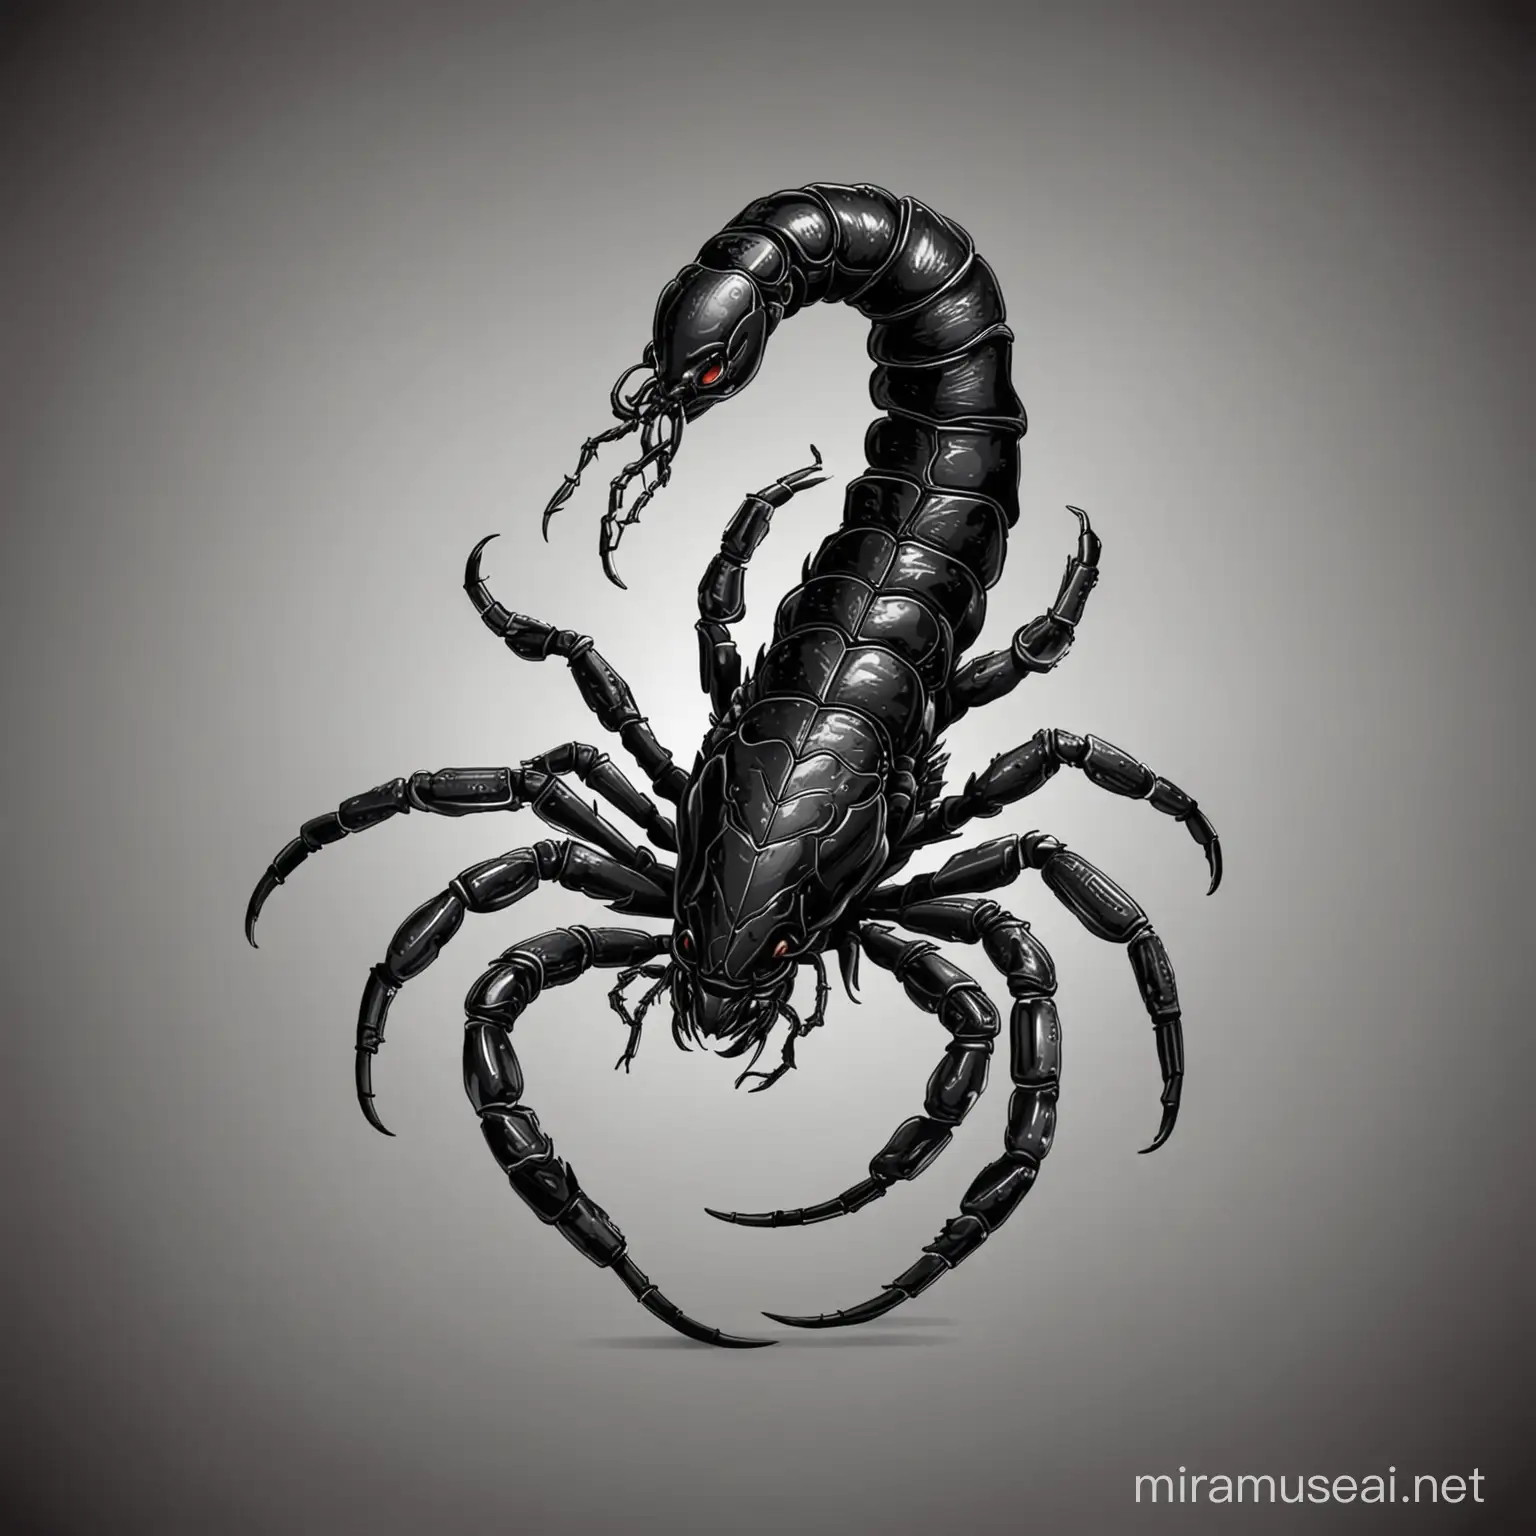 Detailed Black Scorpion Vector Illustration